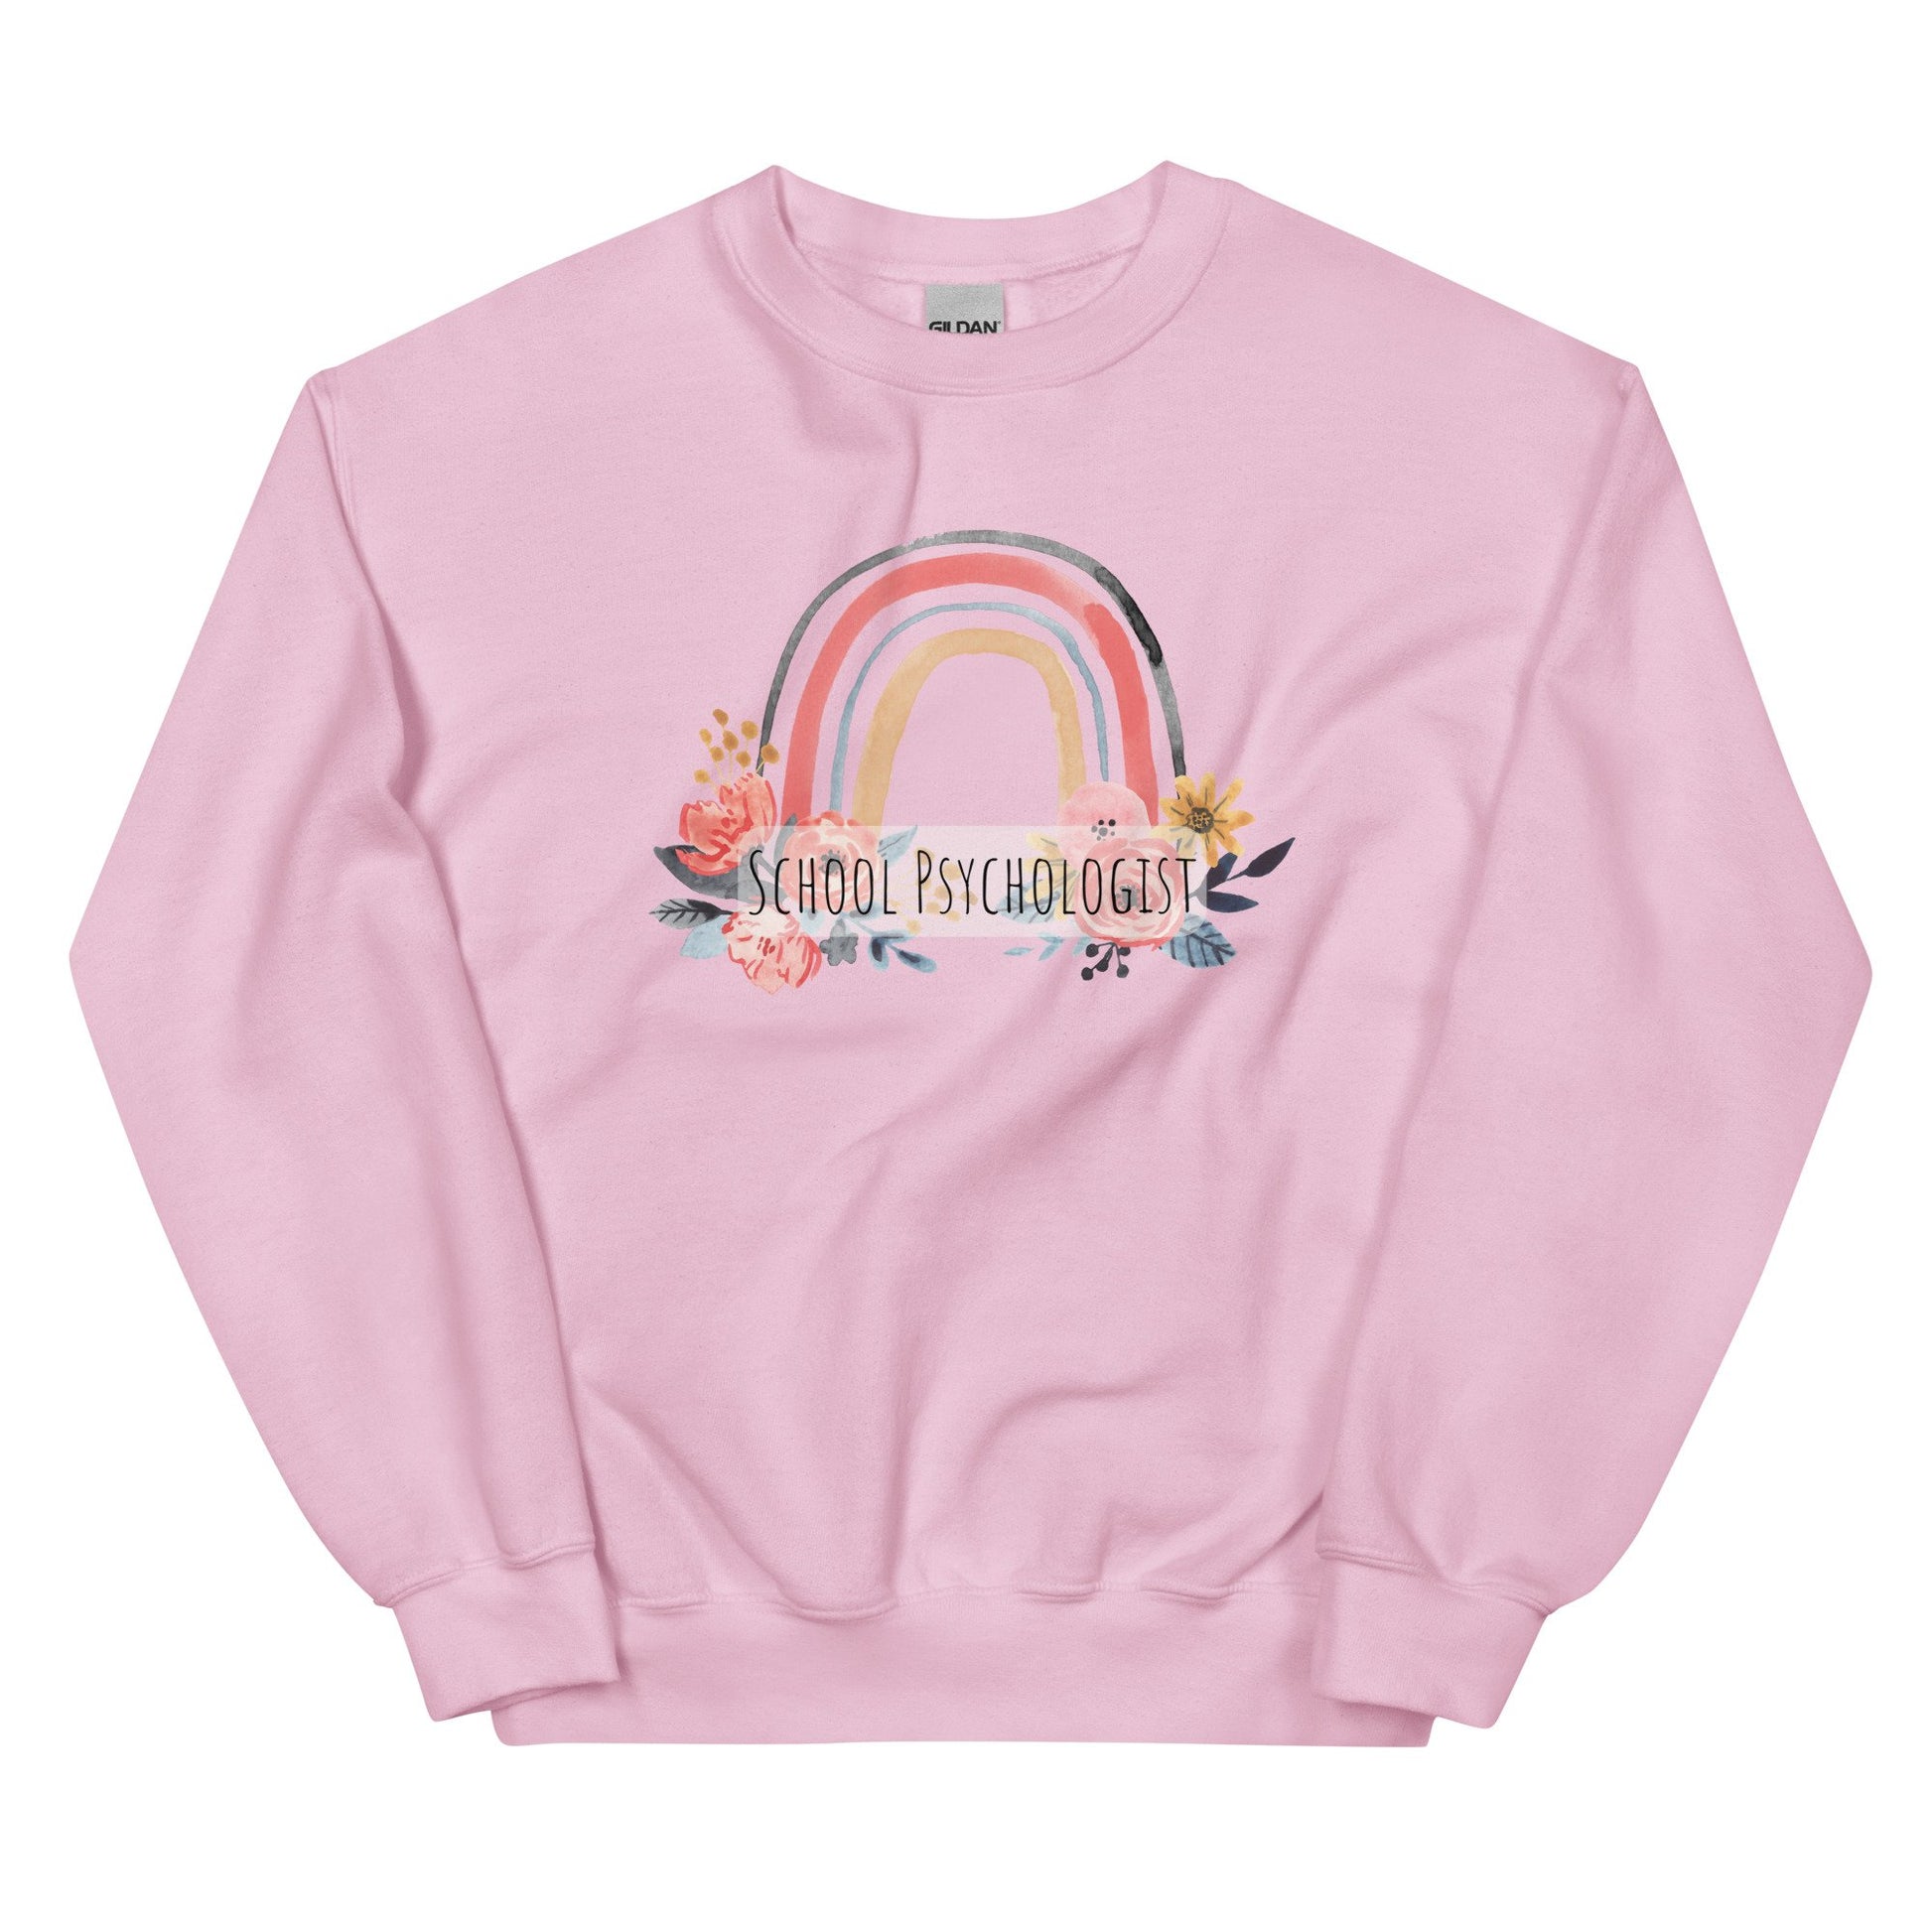 unisex-crew-neck-sweatshirt-light-pink-front-63084e6577ca9.jpg